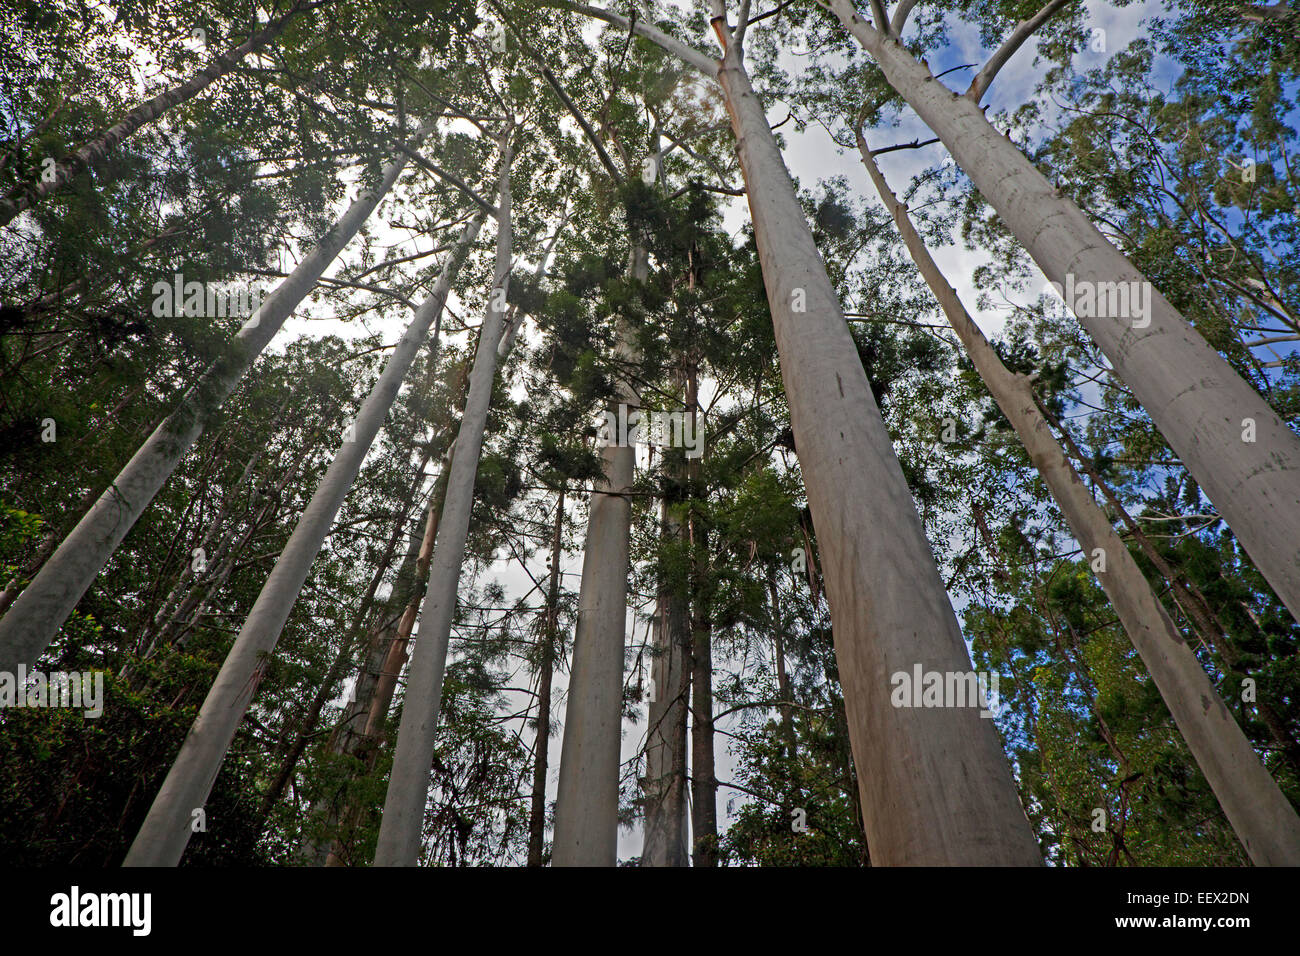 Abedul blanco / crabapple australiano / humbug (Schizomeria ovata) los árboles en la selva tropical en la isla de Fraser, Queensland, Australia Foto de stock